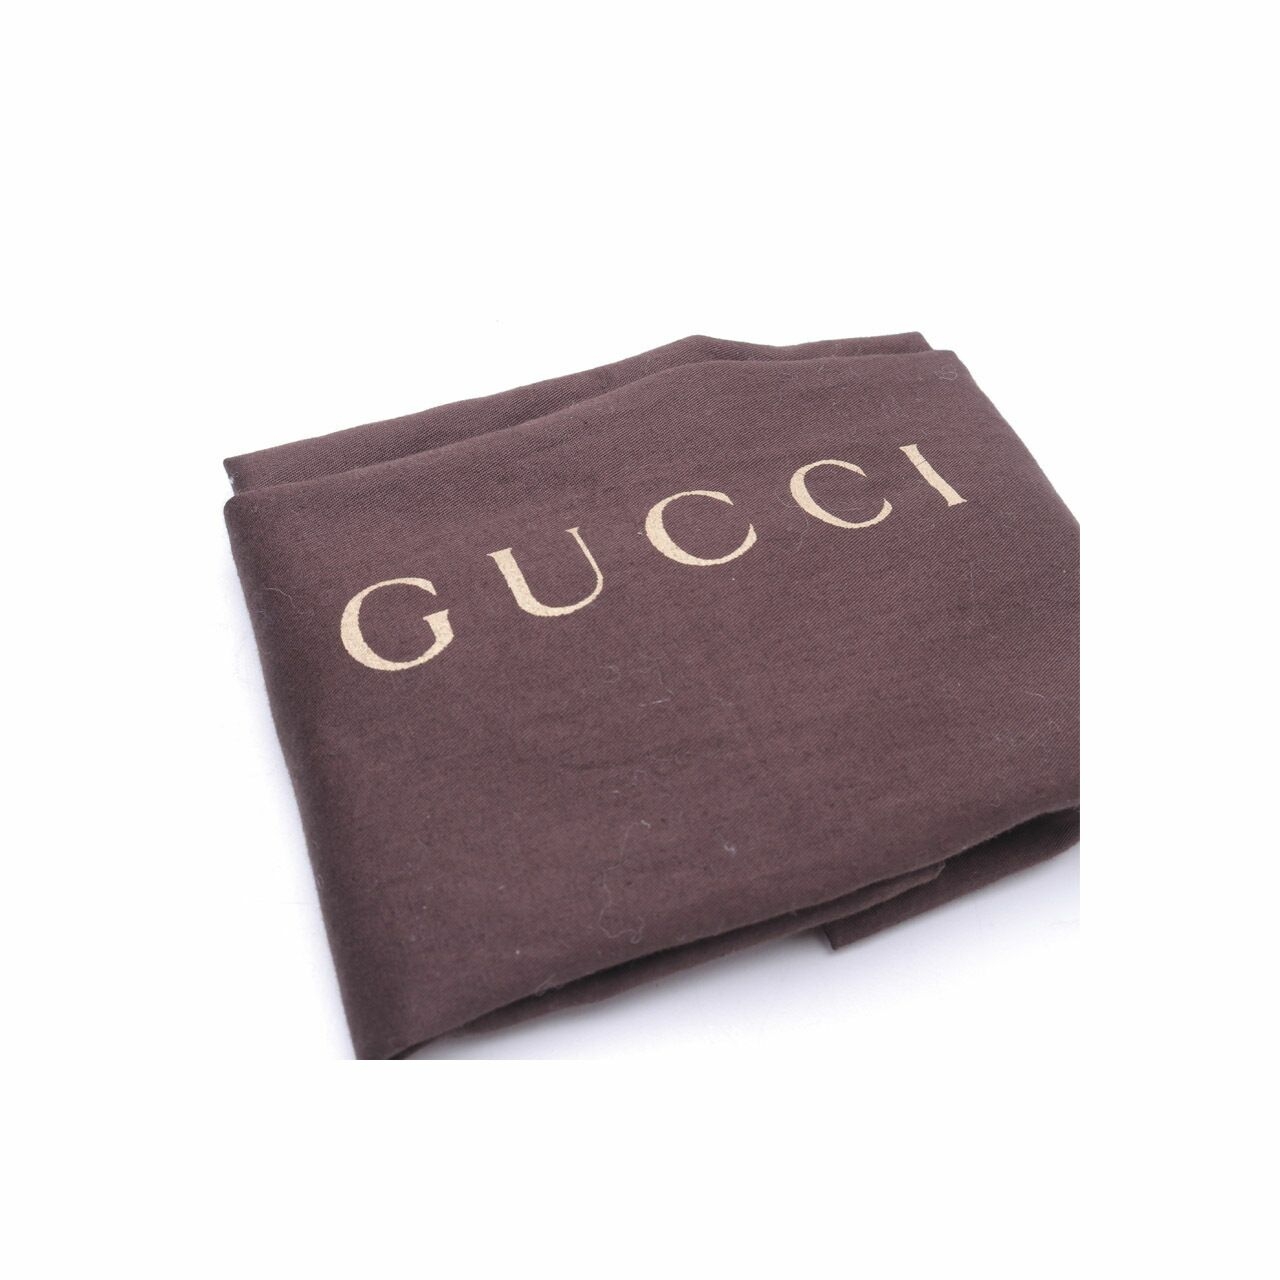 Gucci GG Marmont Matelassé Black Pearl Shoulder Bag